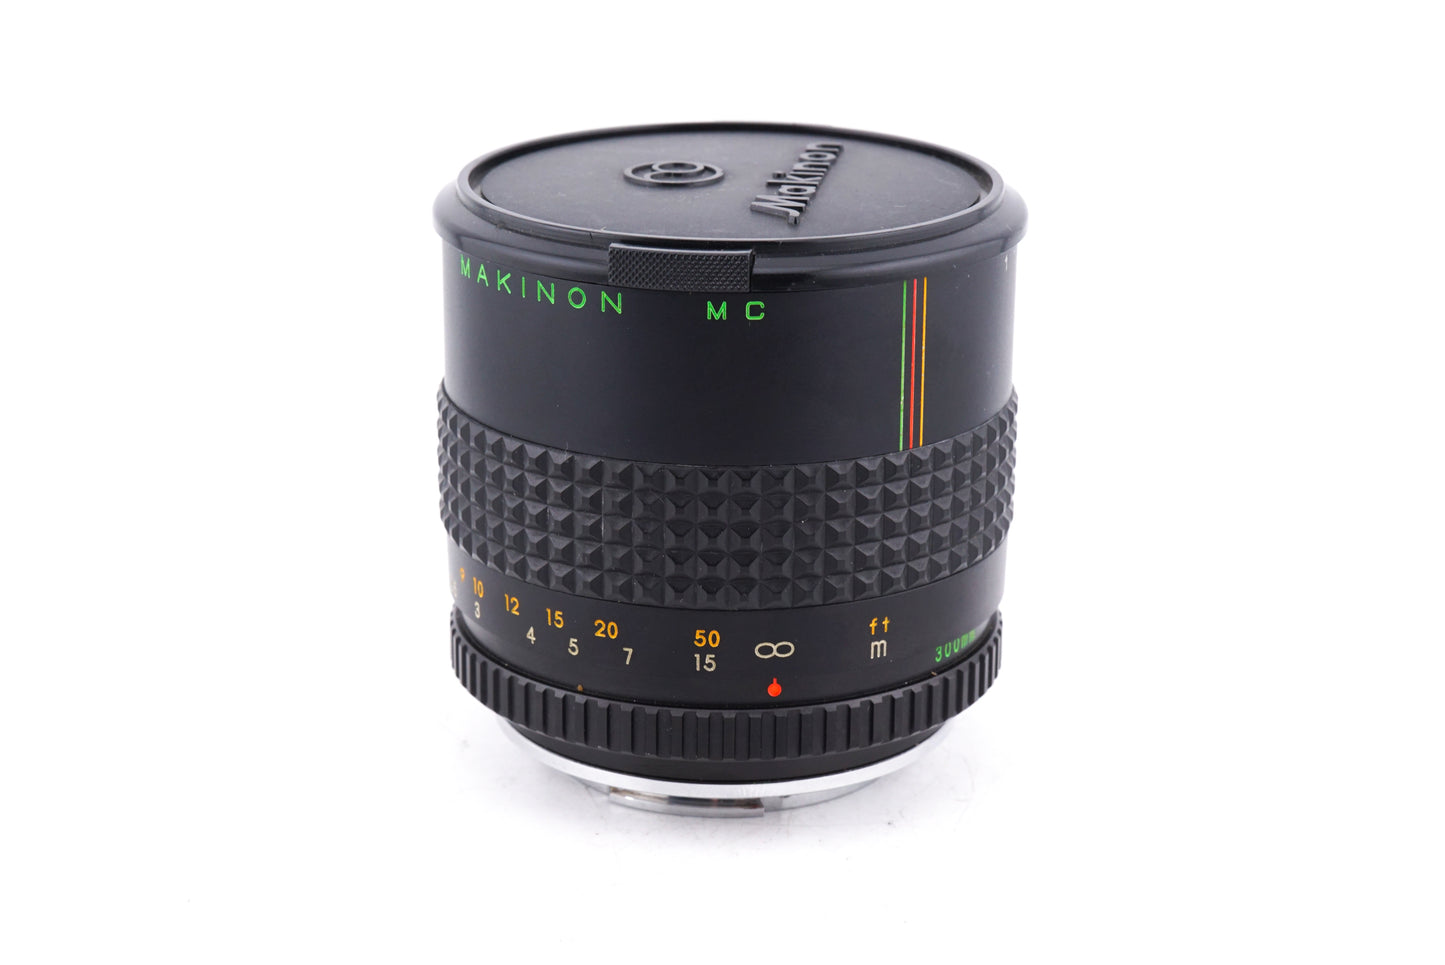 Makinon 300mm f5.6 Reflex MC - Lens